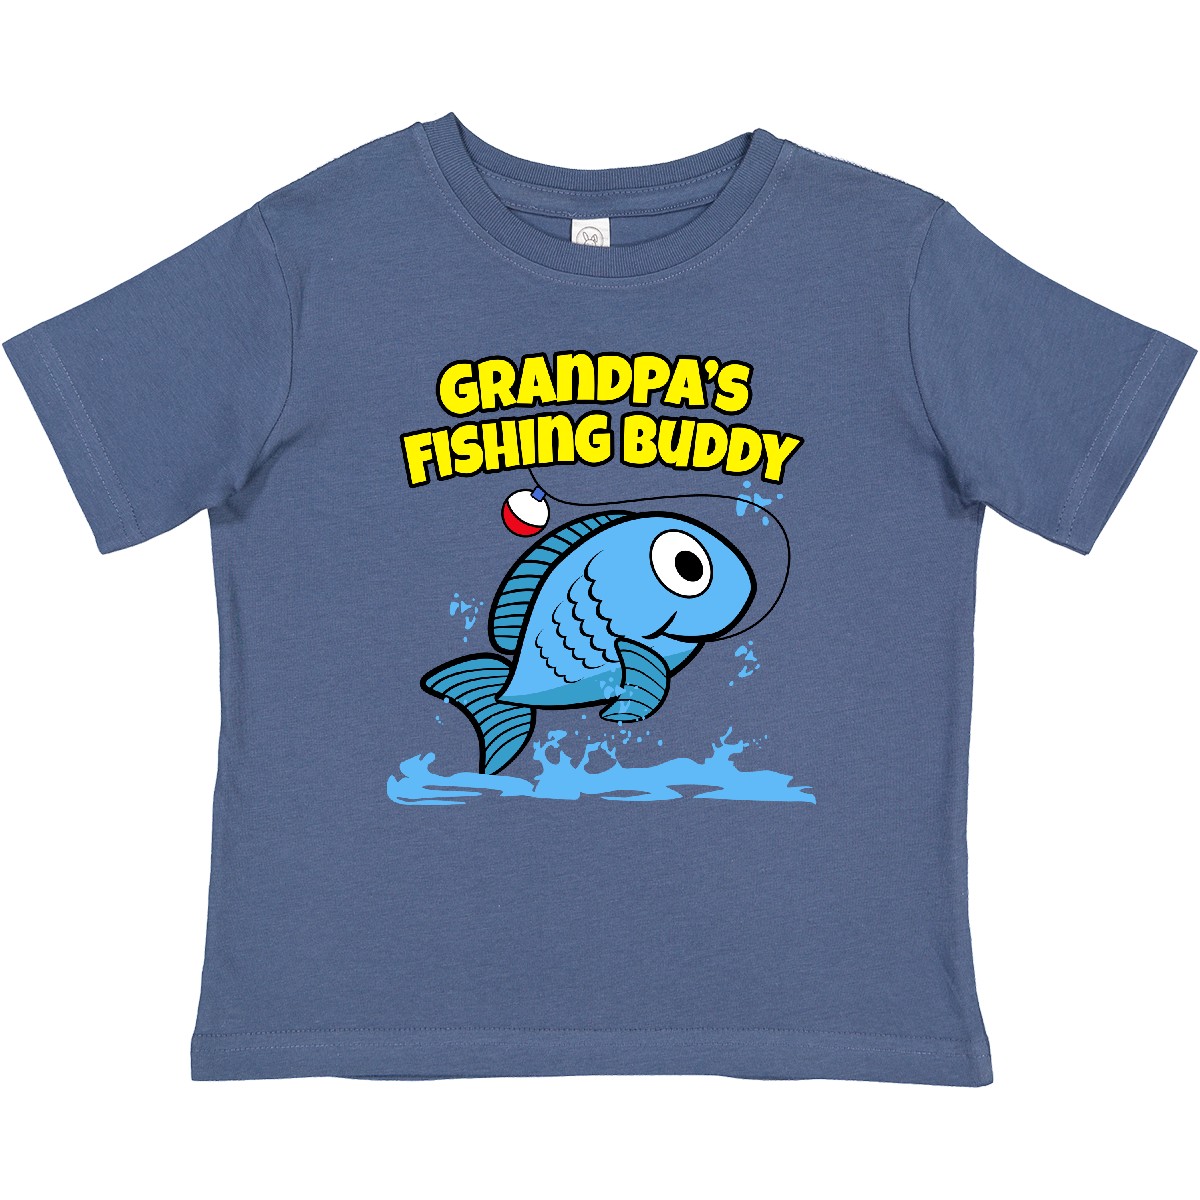 FISHING - GRANDPAS GETTING A NEW FISHING BUDDY Men's T-Shirt